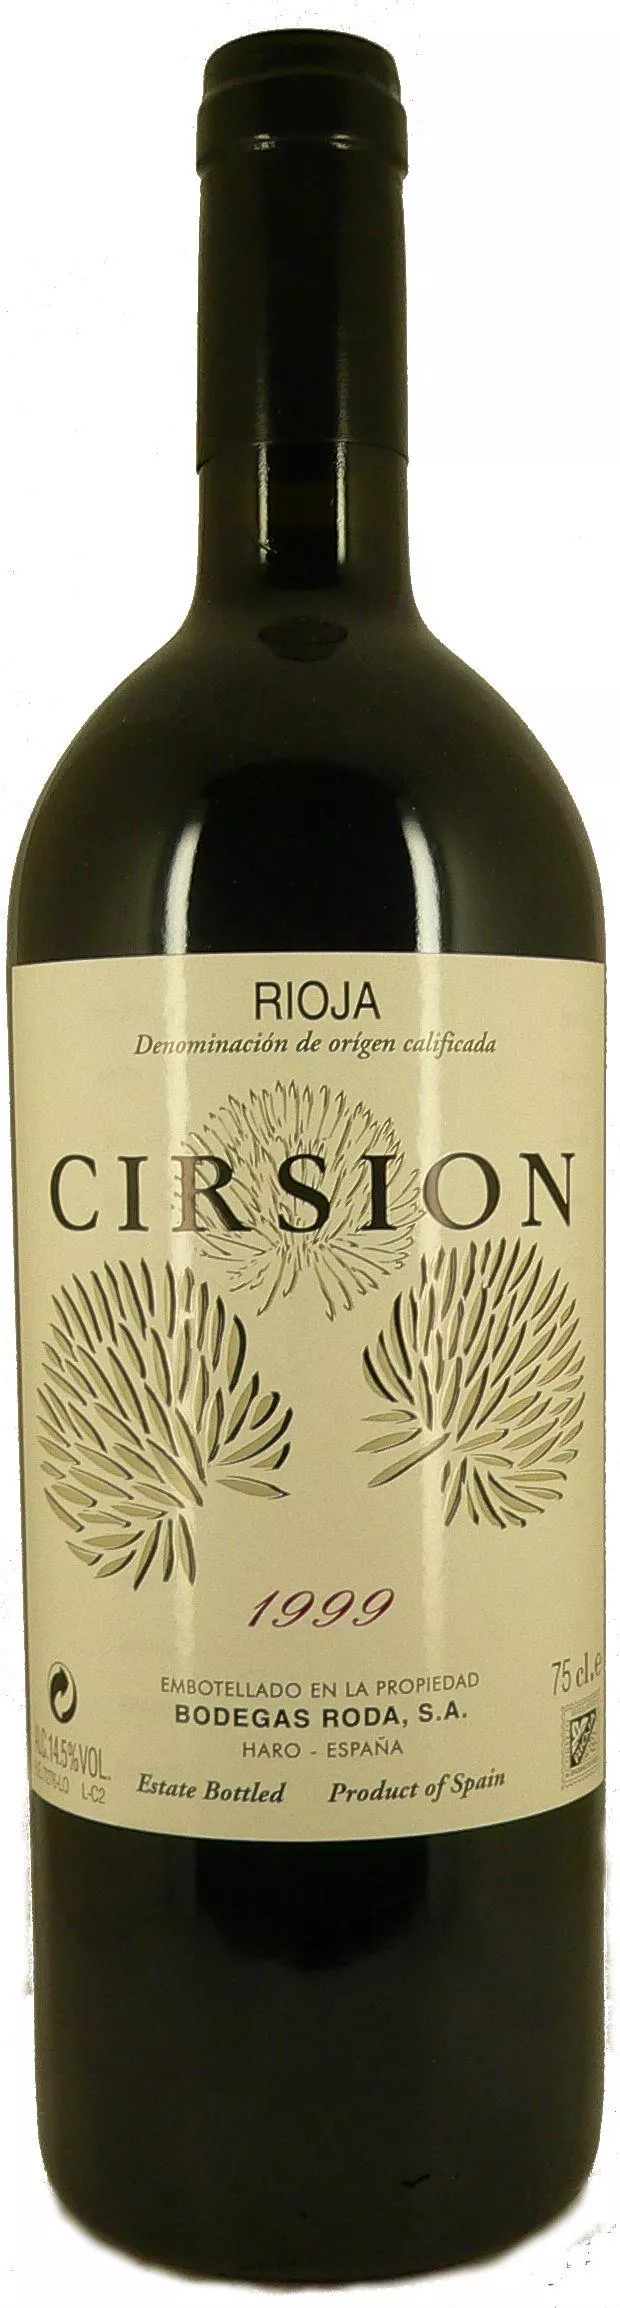 1999 Rioja Cirsion